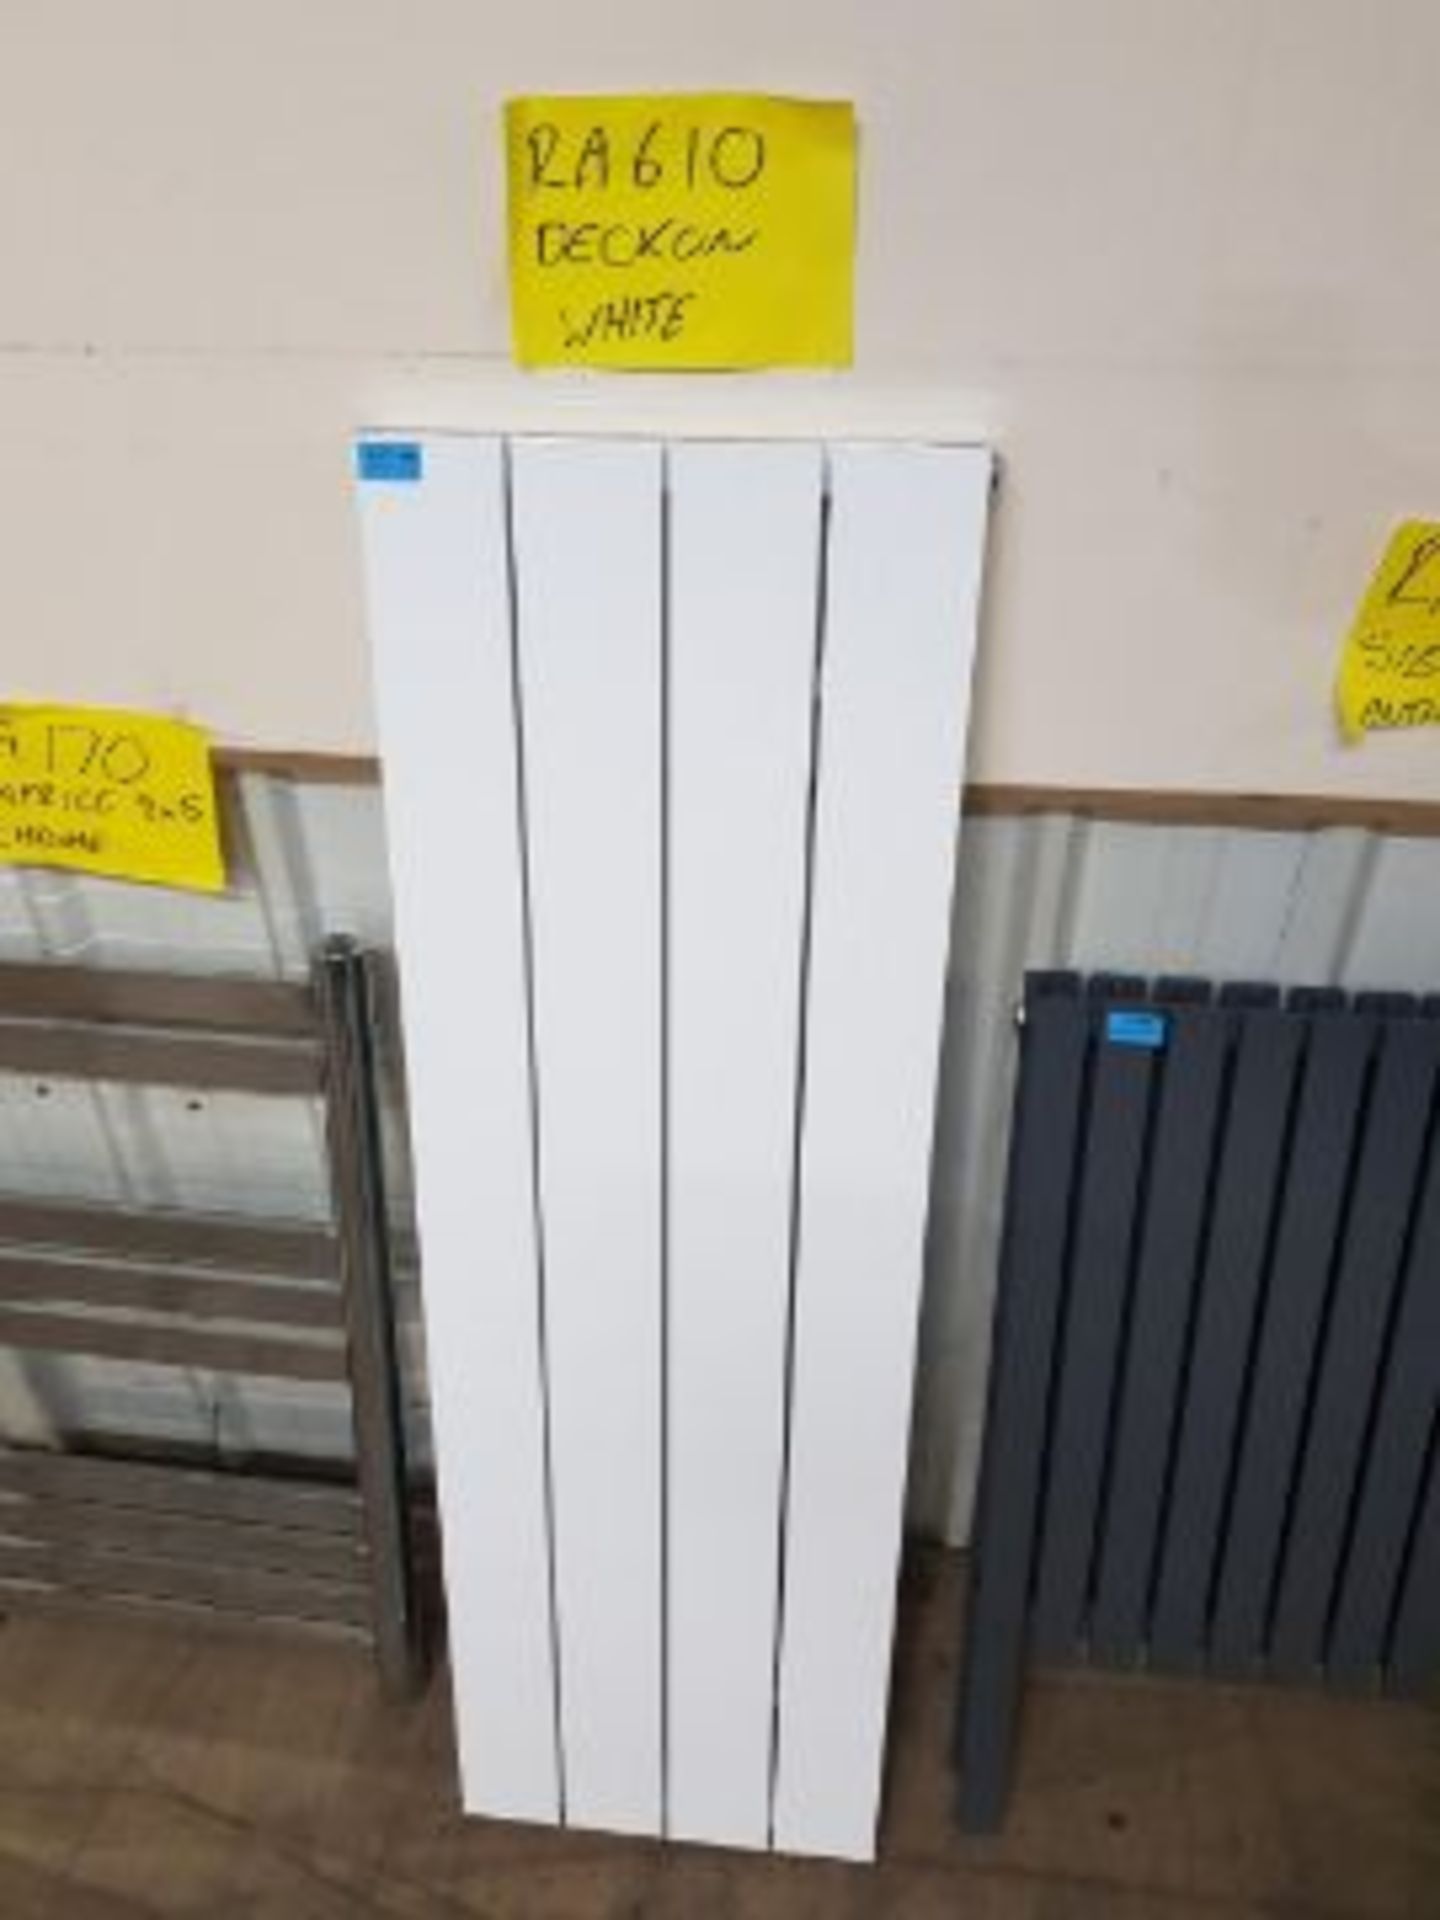 Deckon 380 x 1200mm flat panel designer radiator in white with chrome trim. RA610 - Image 2 of 2